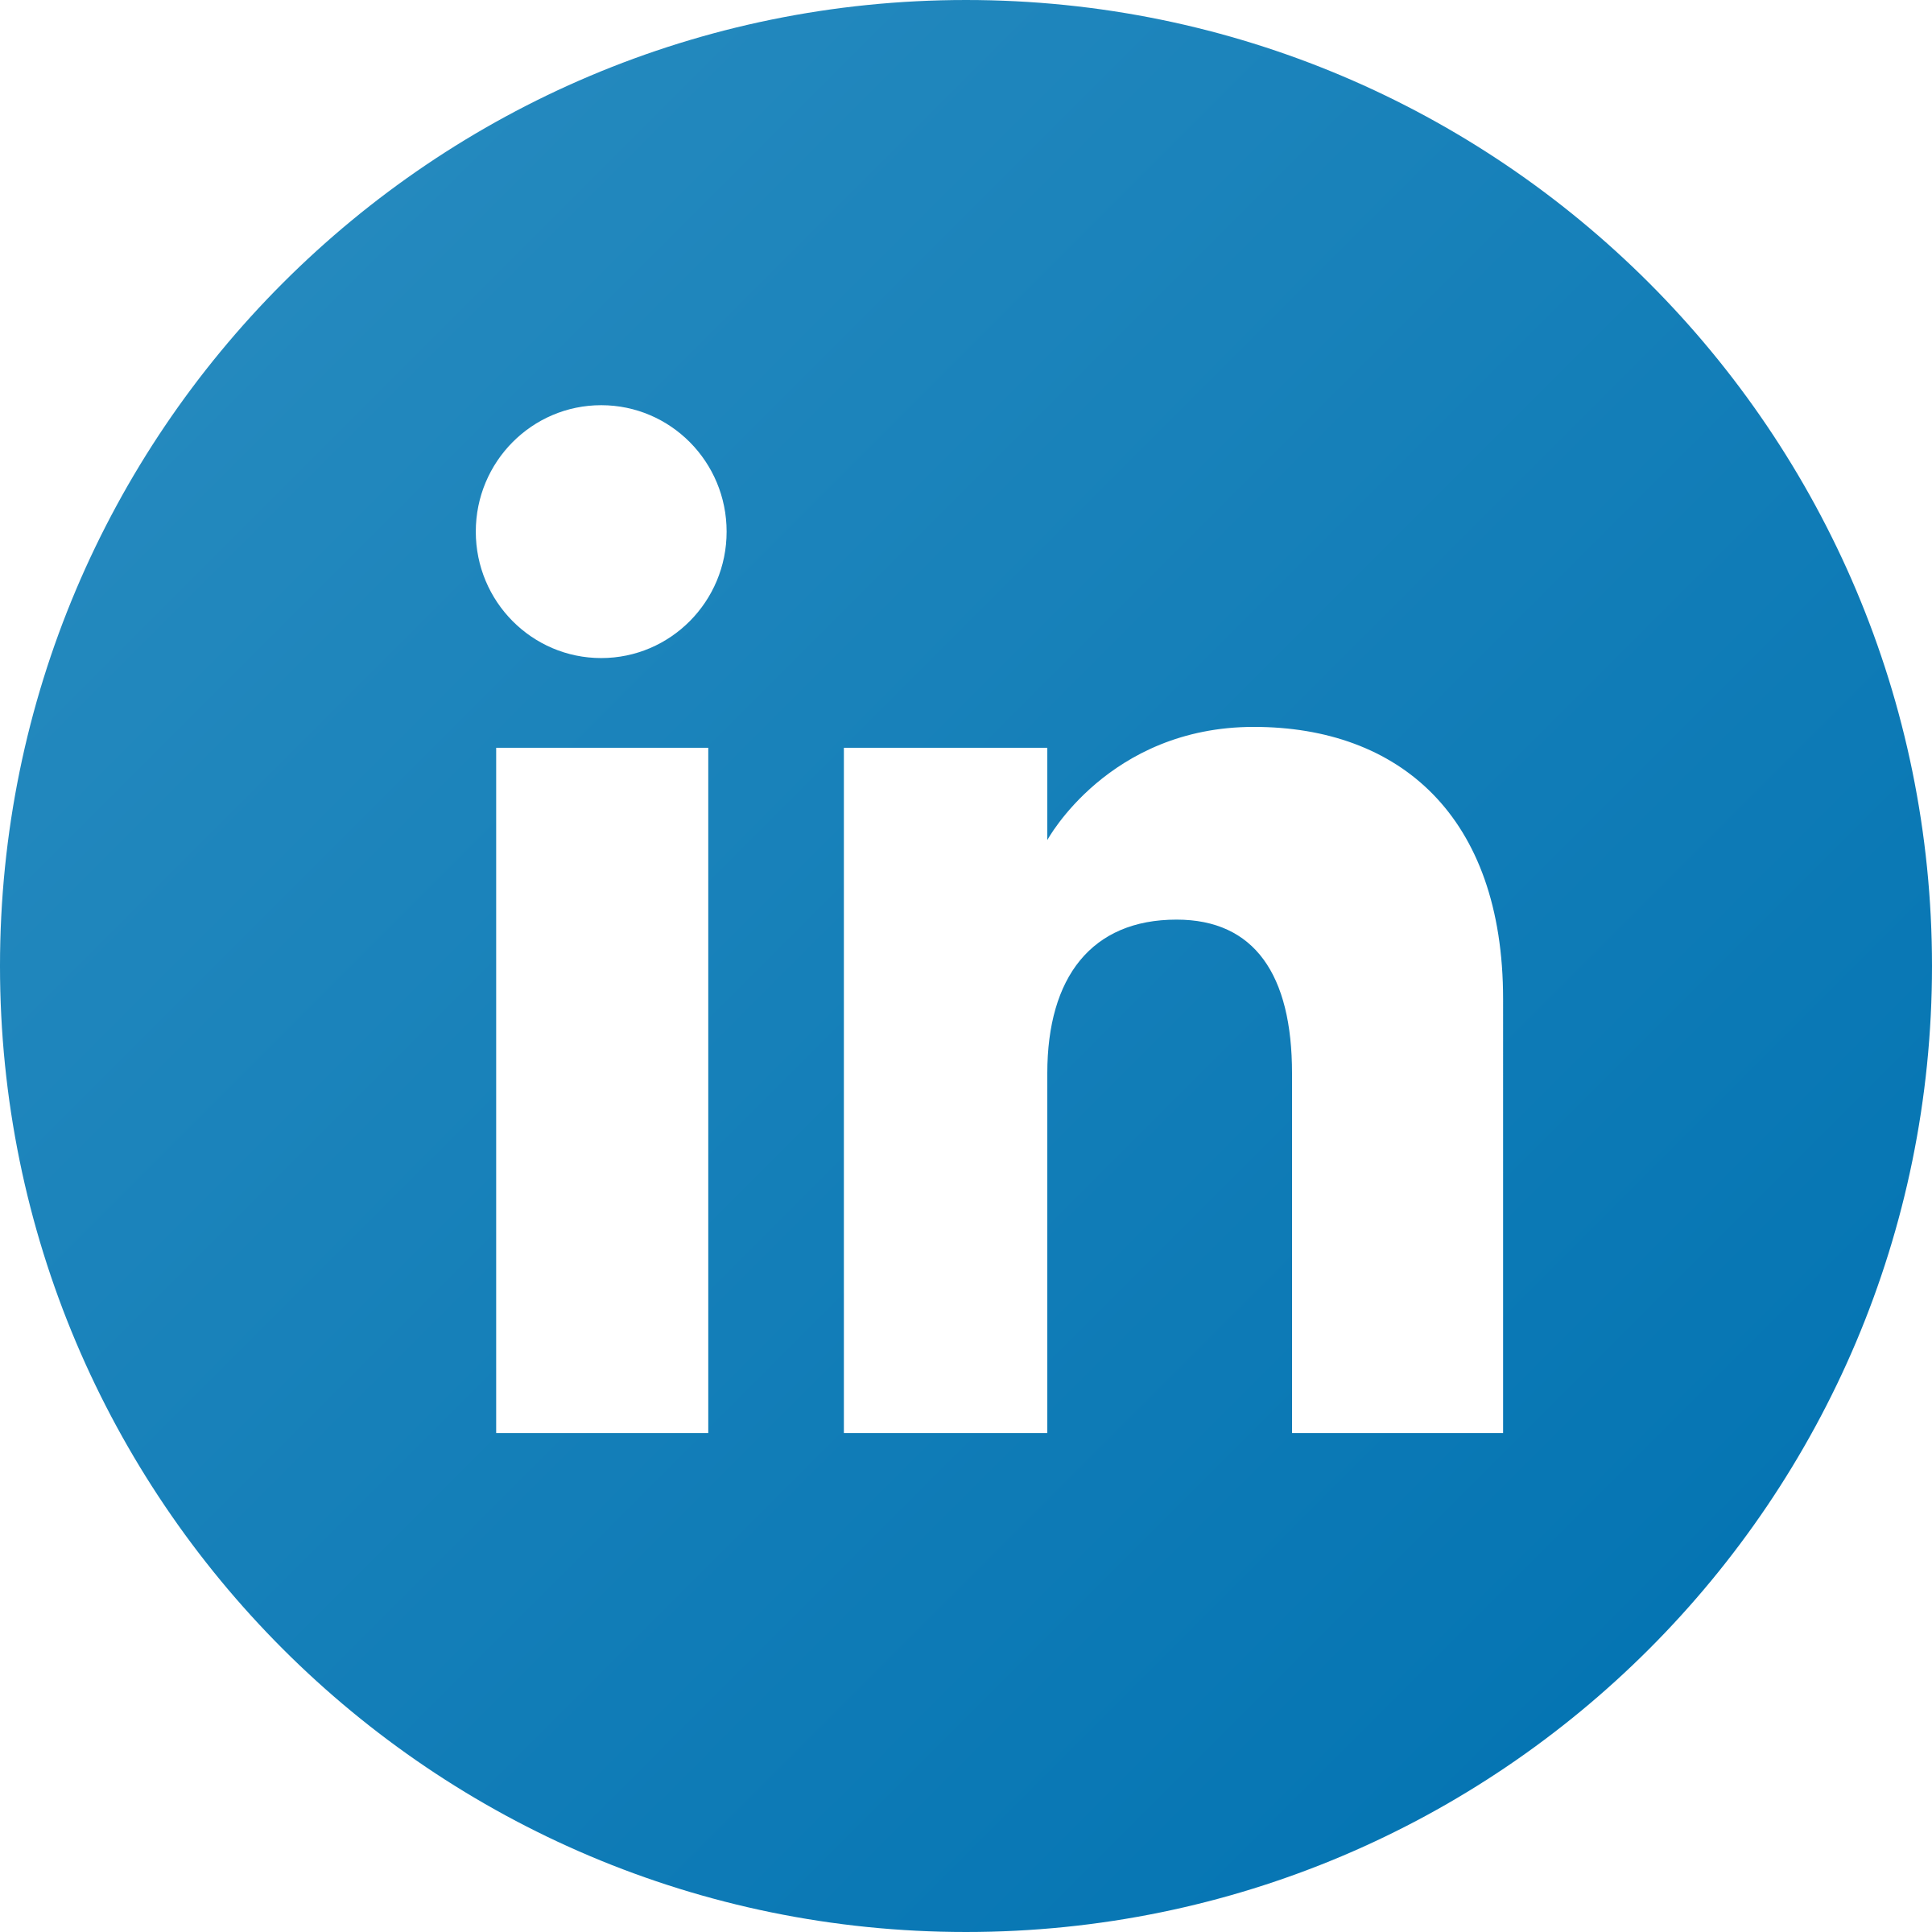 linkedin-icon-logo-png-transparent.png